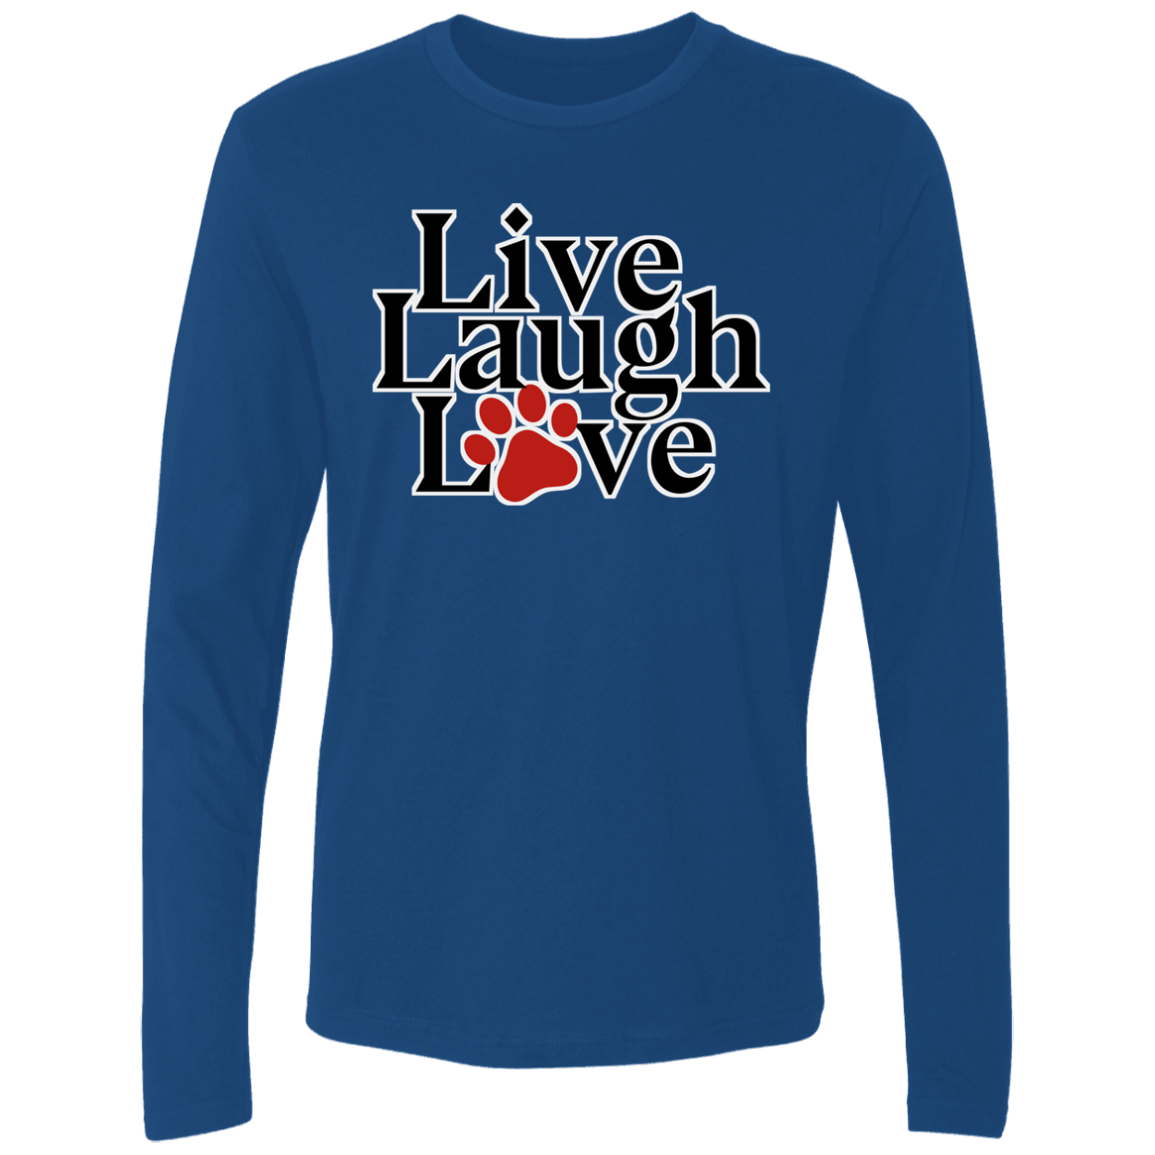 Live Laugh Love - Long Sleeve T Shirt.